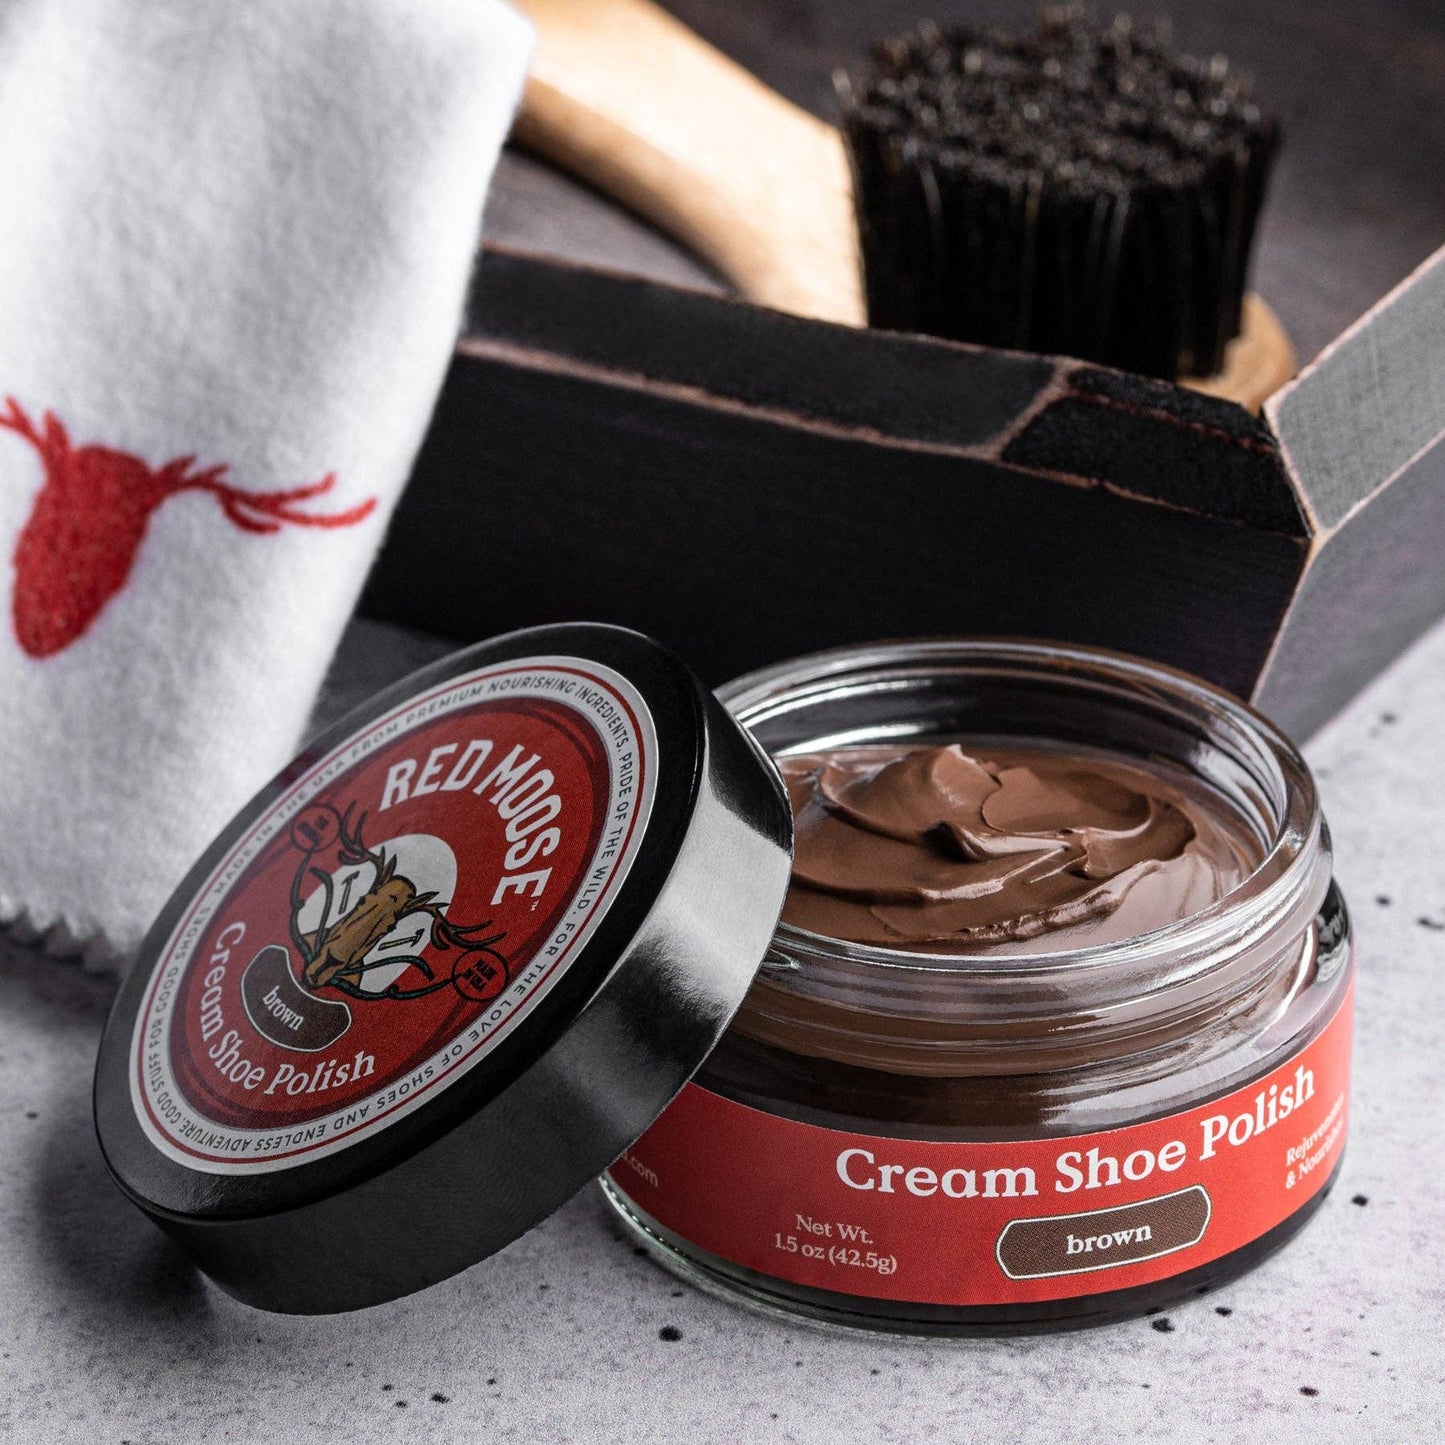 Cream Shoe Polish: Neutral